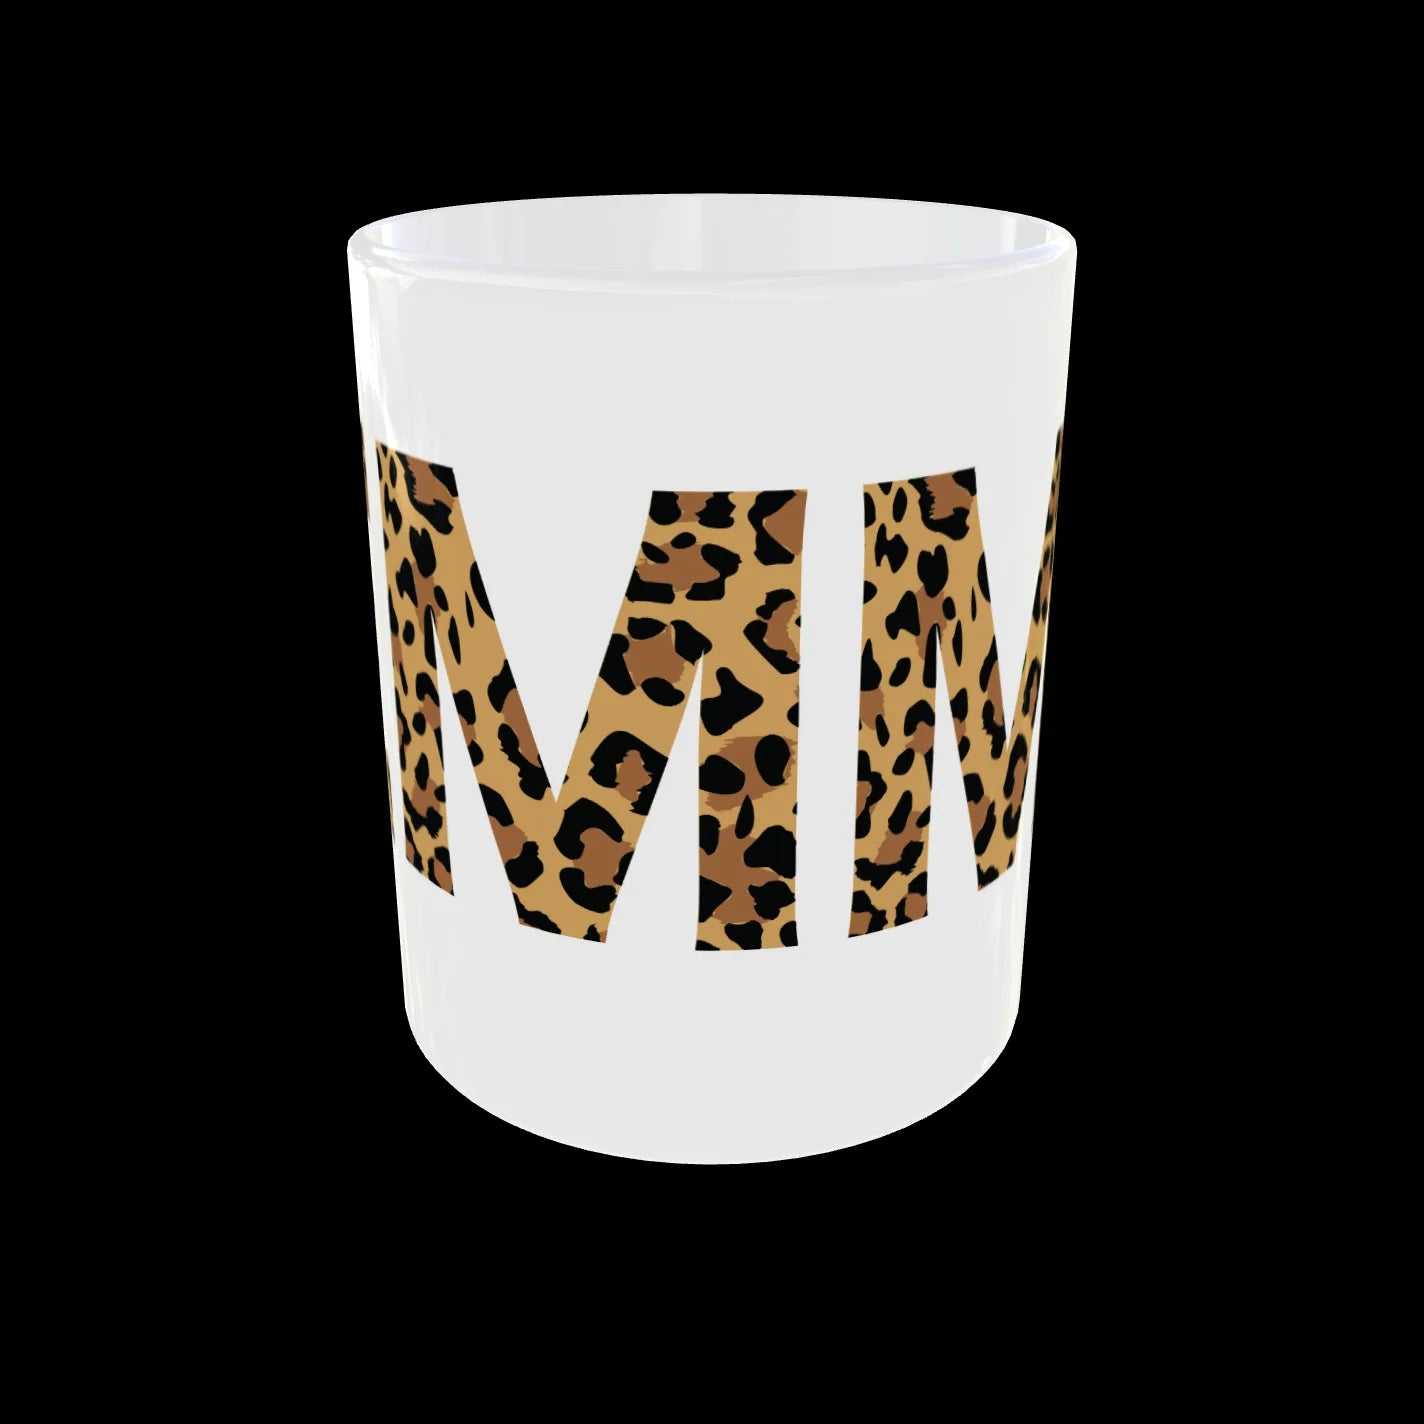 Personalised Name Mug Leopard Animal Print Design